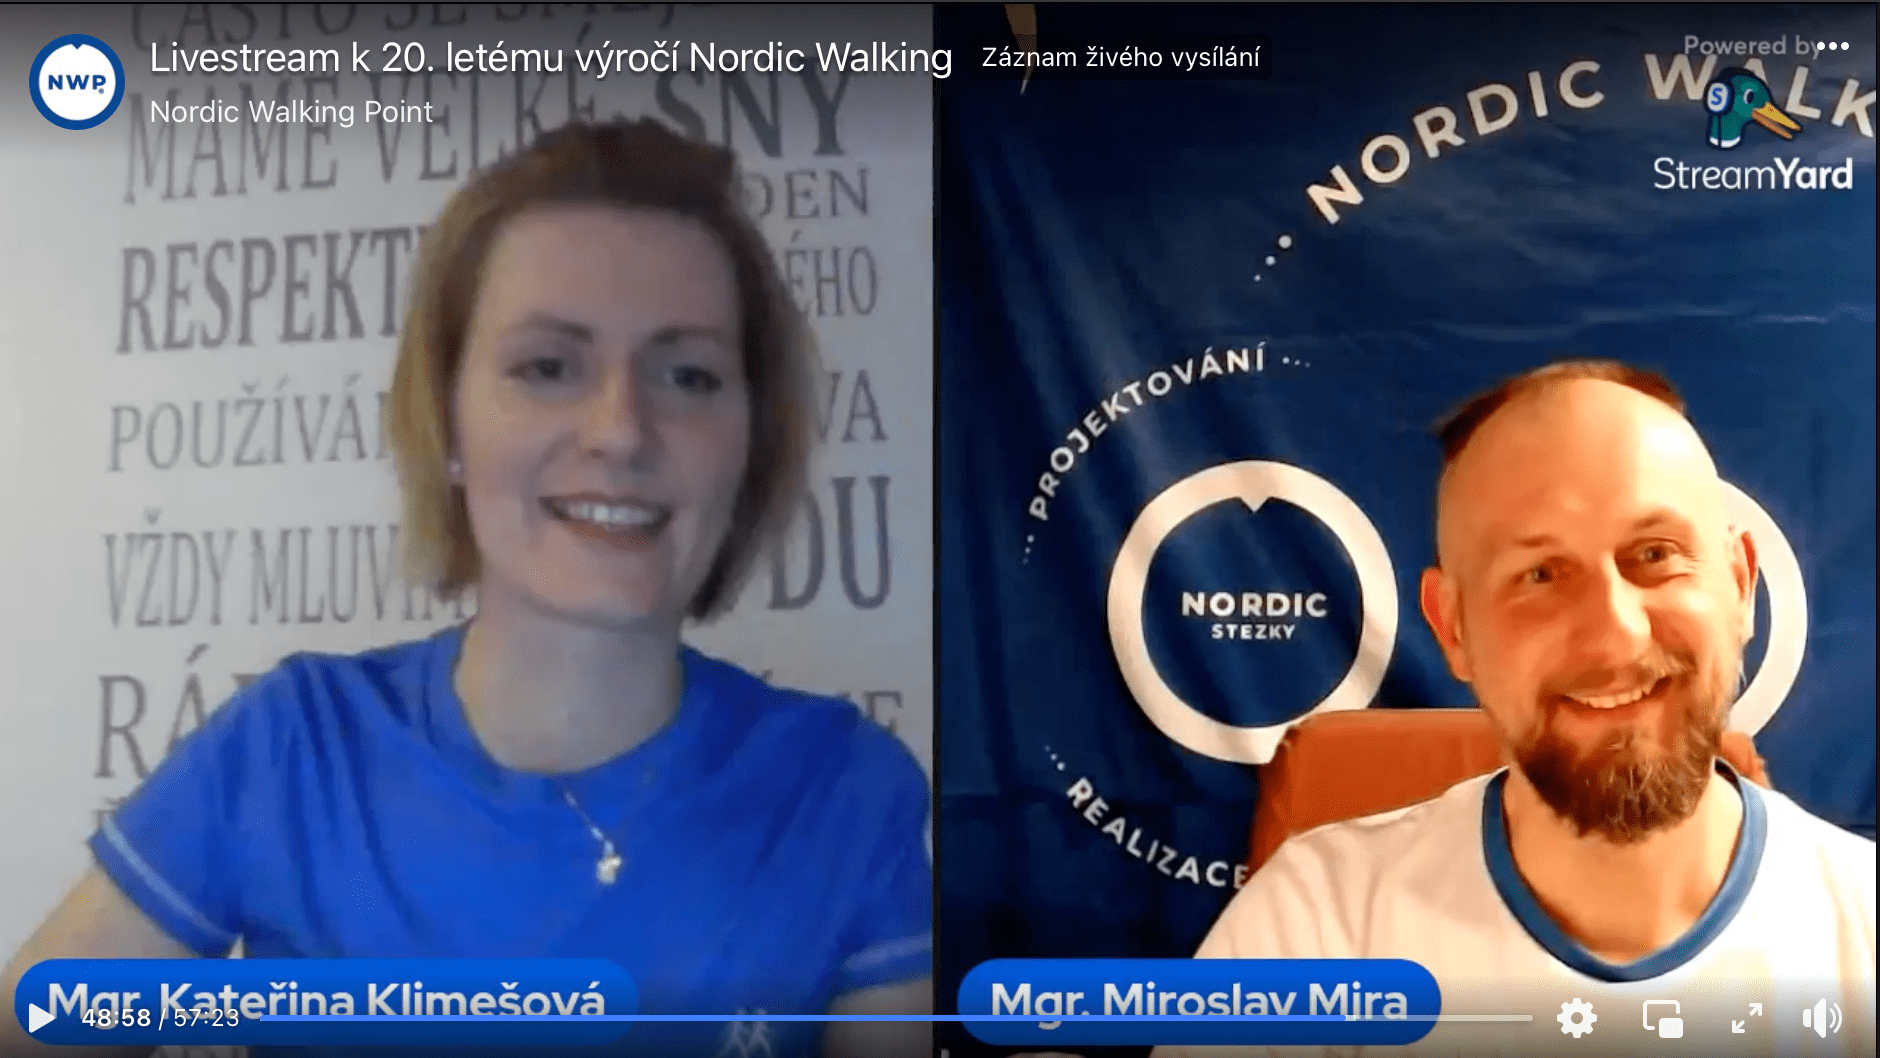 Live stream # 20 let Nordic walking Miroslava Miry